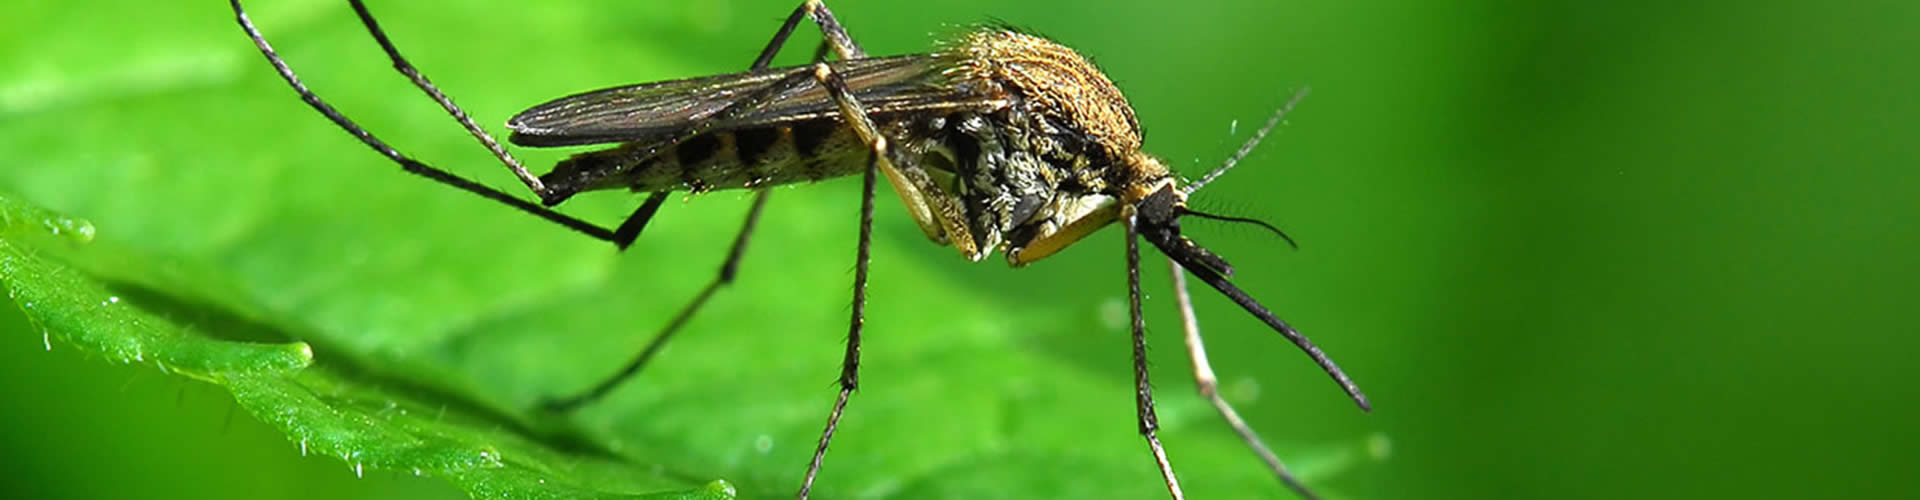 Biblion, control de plagas de mosquitos en toda España